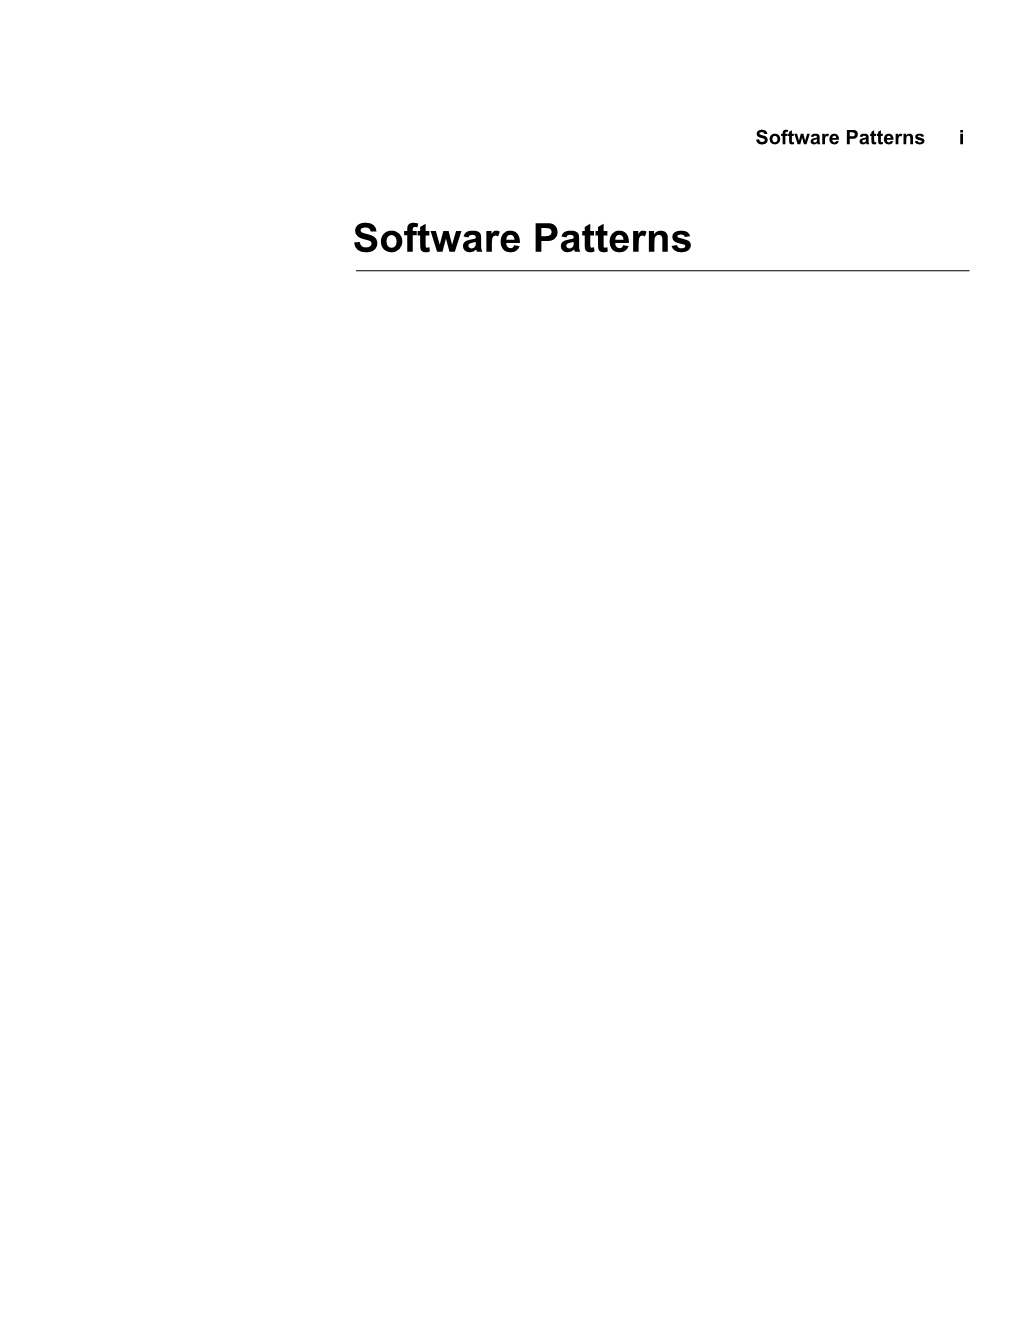 Coplien Software Patterns